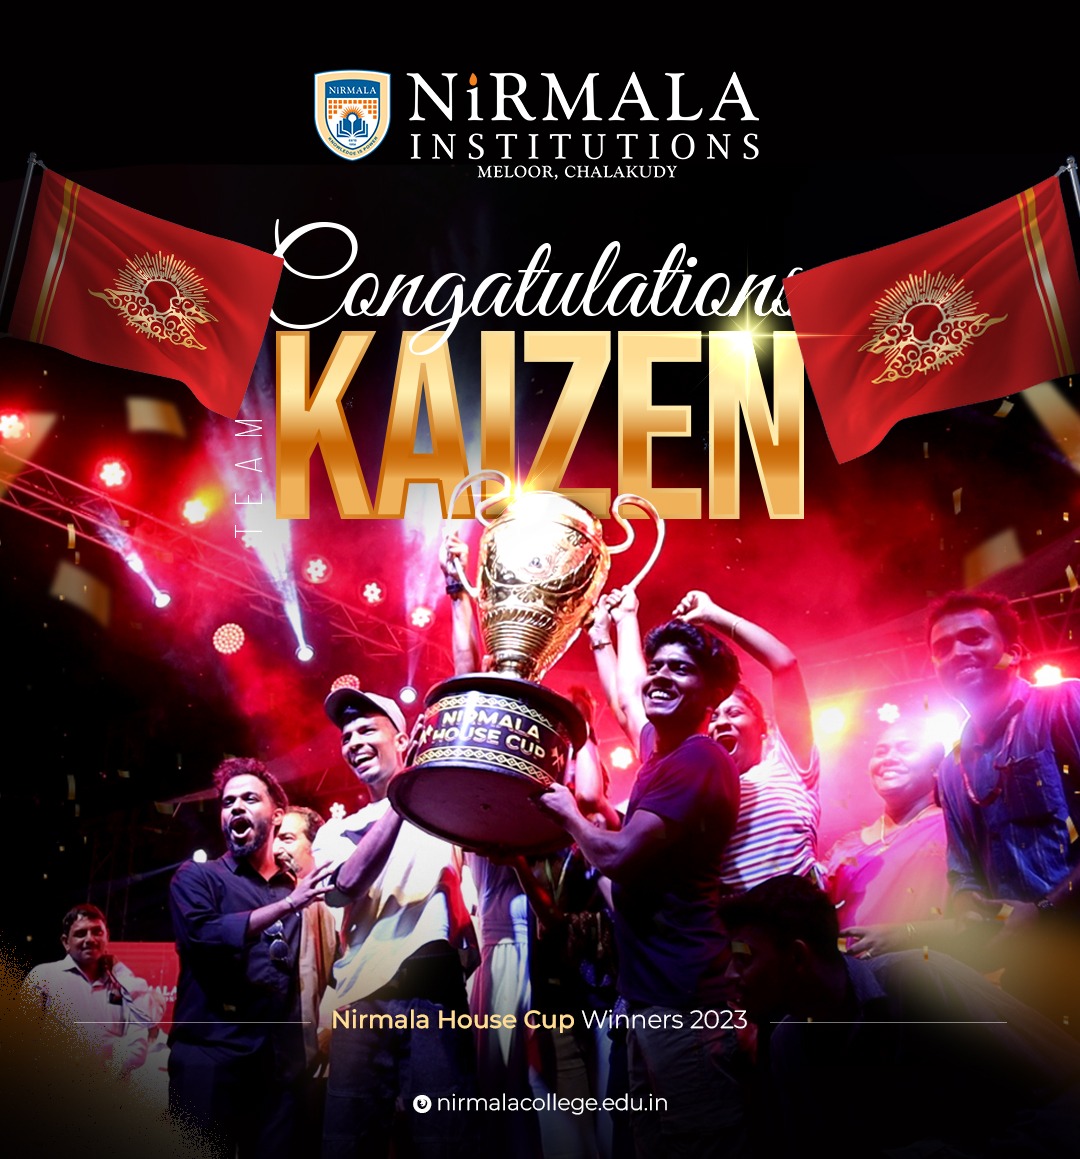 House Cup Champions of Nirmala